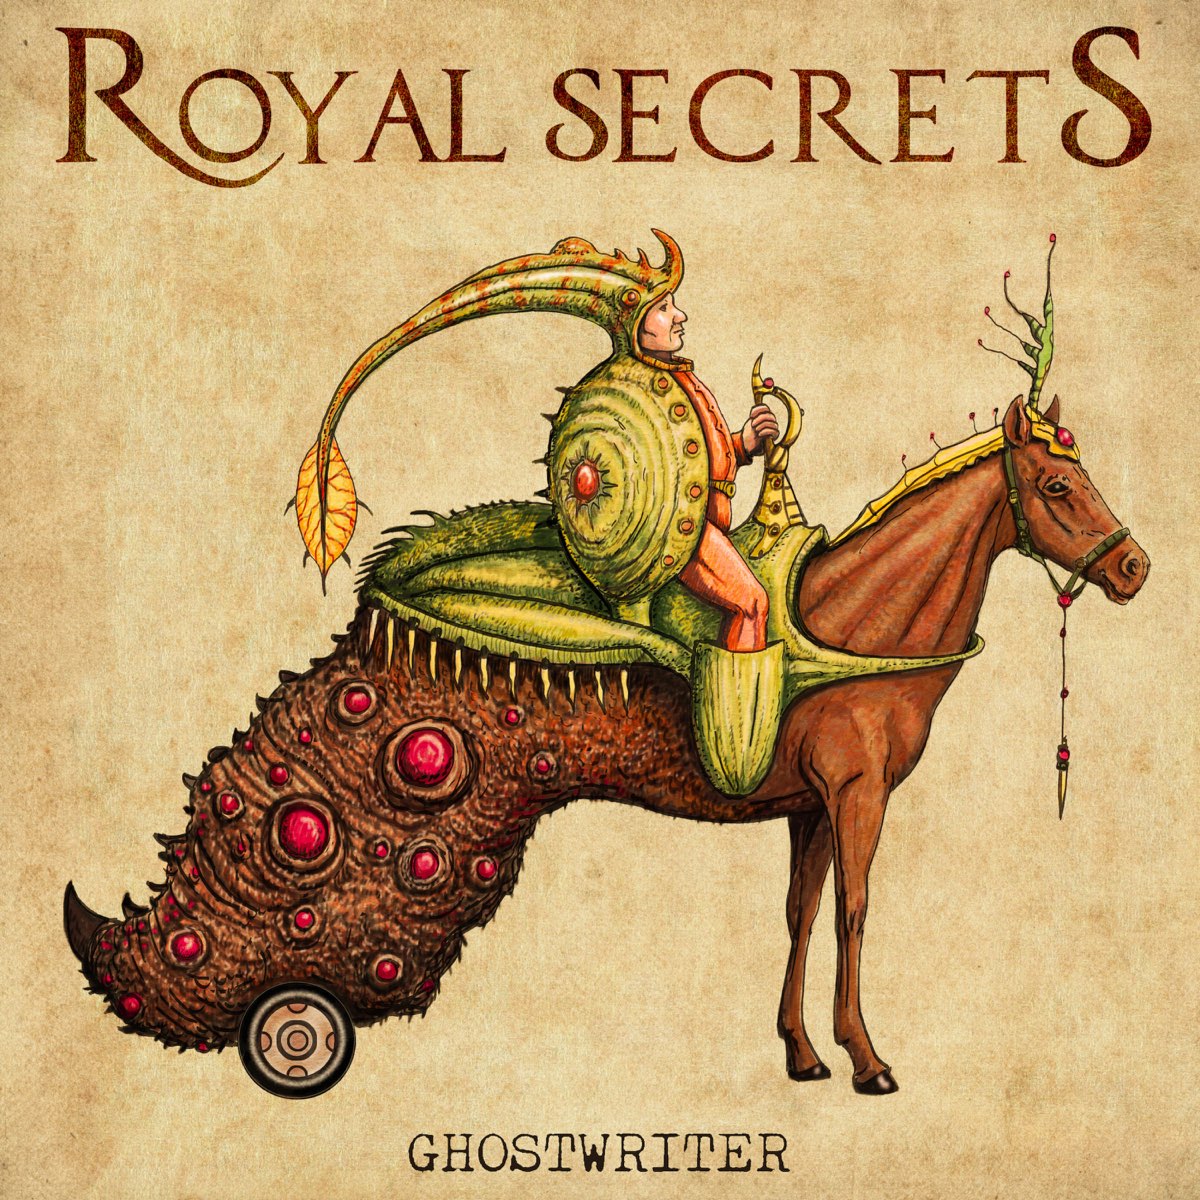 Royal secret. Judgement Cover Art. MAGICALTEAPOT.